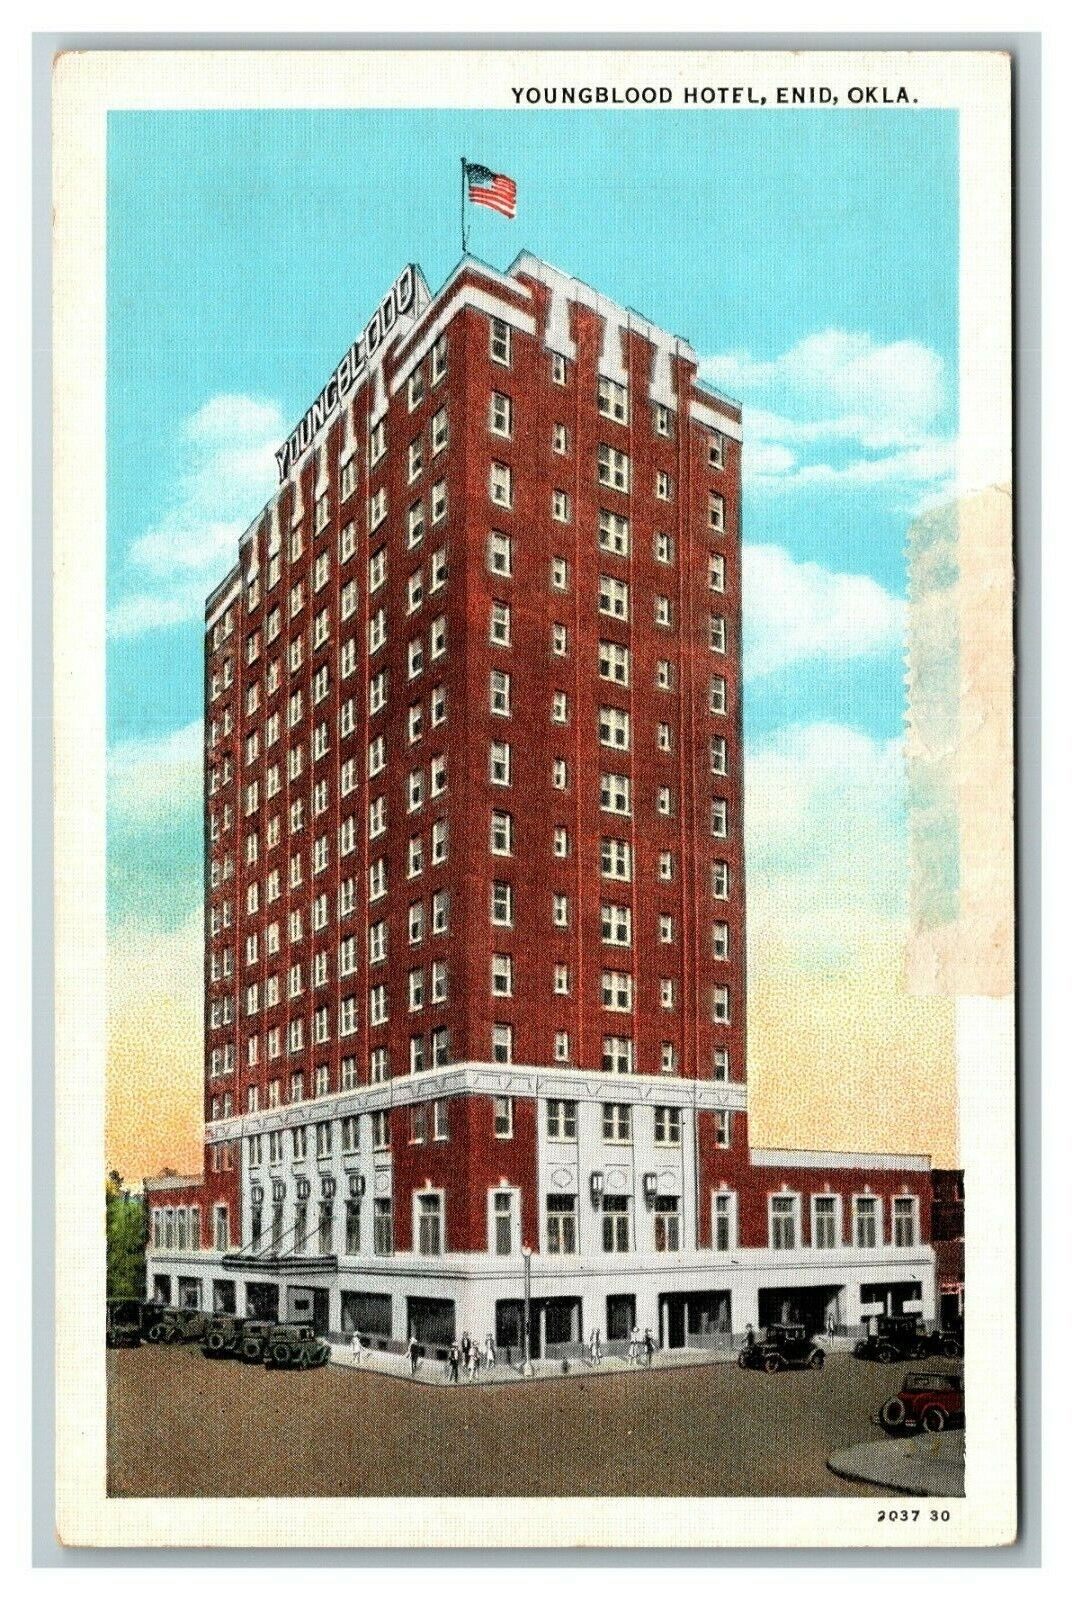 Youngblood Hotel, Enid OK c1930's Vintage Postcard